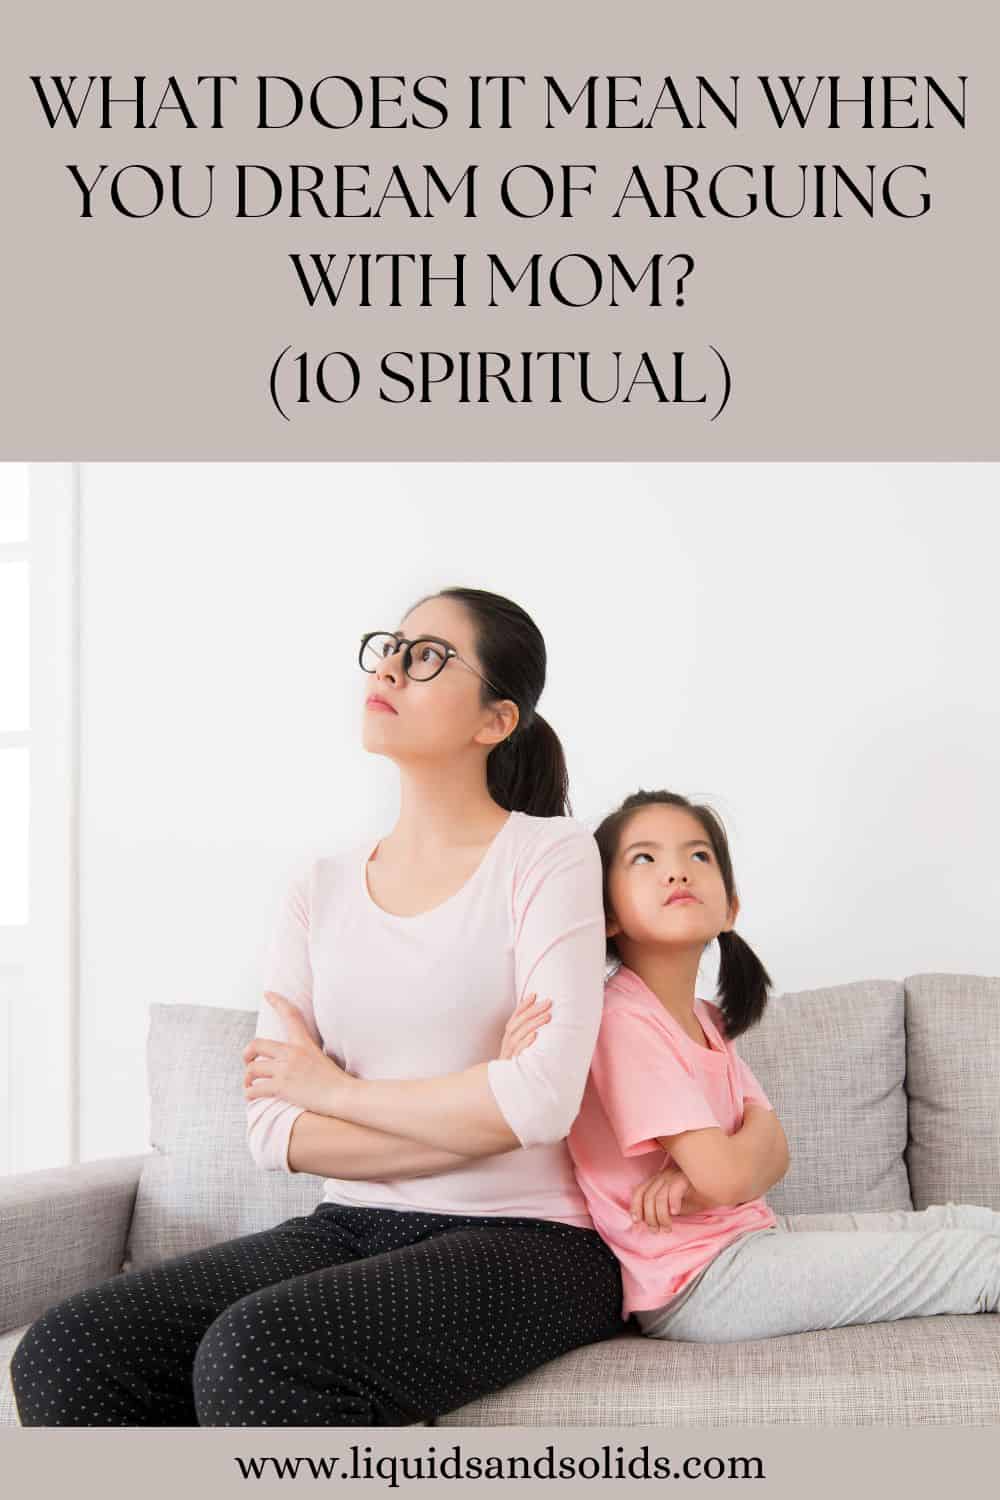  Rêver de se disputer avec sa mère (10 significations spirituelles)